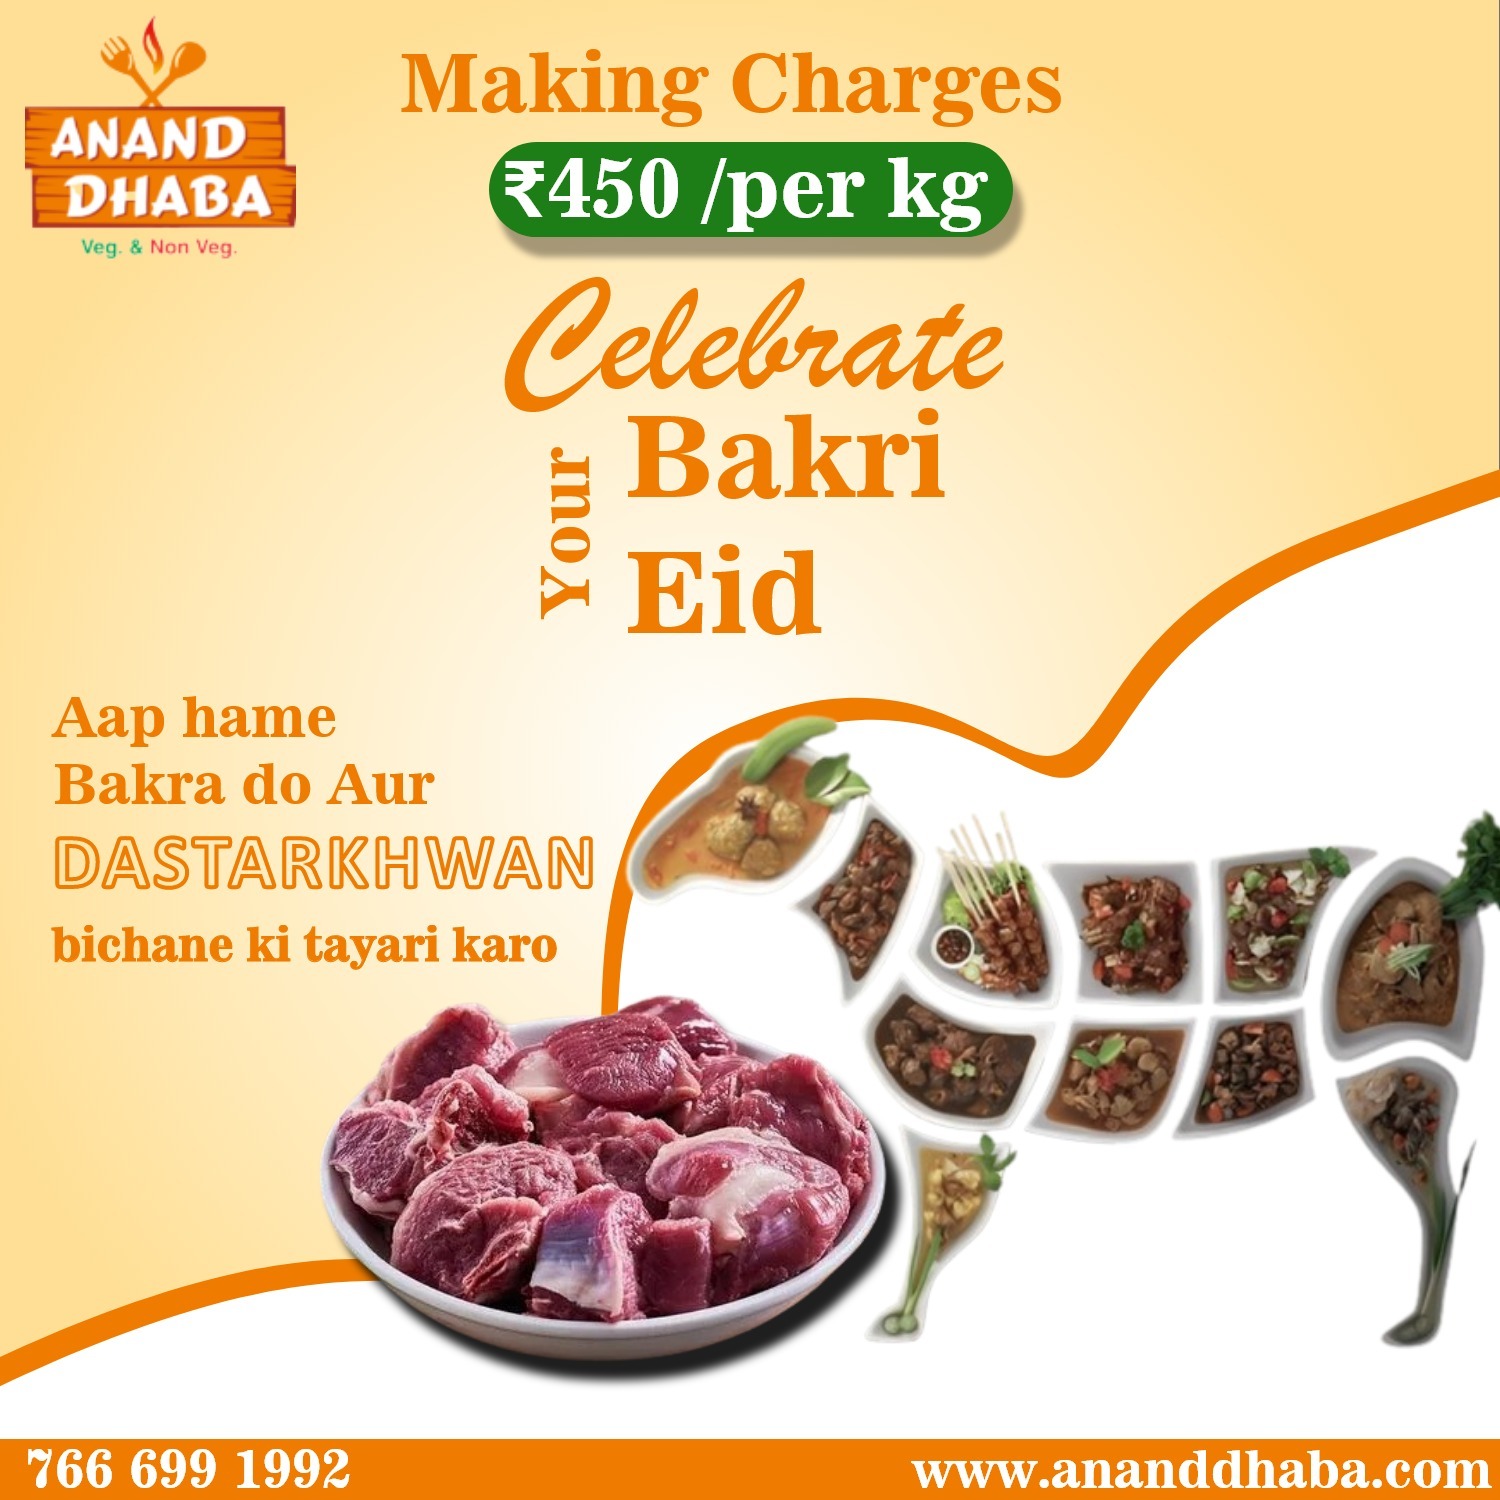  Celebrate Bakri Eid with Anand Dhaba! 